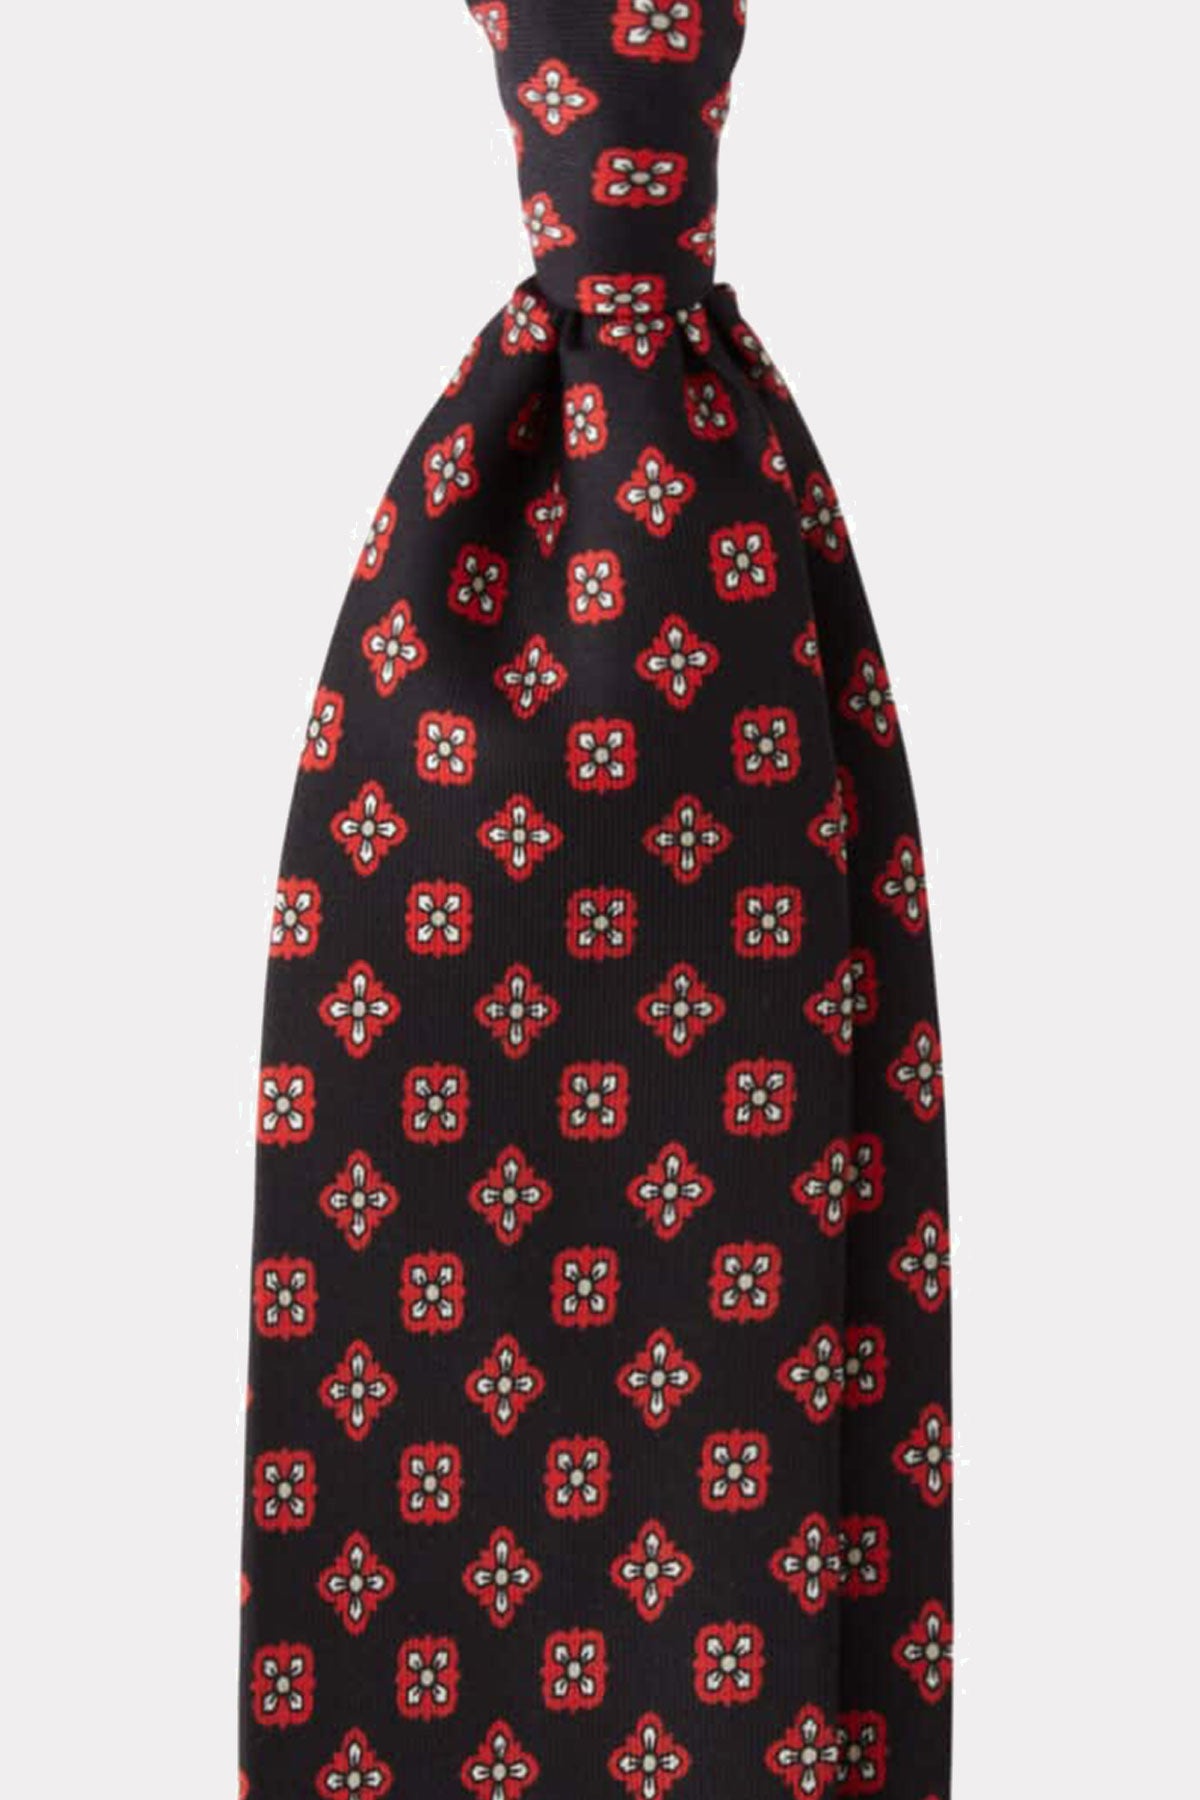 Krawatte in schwarz-rot gemustert